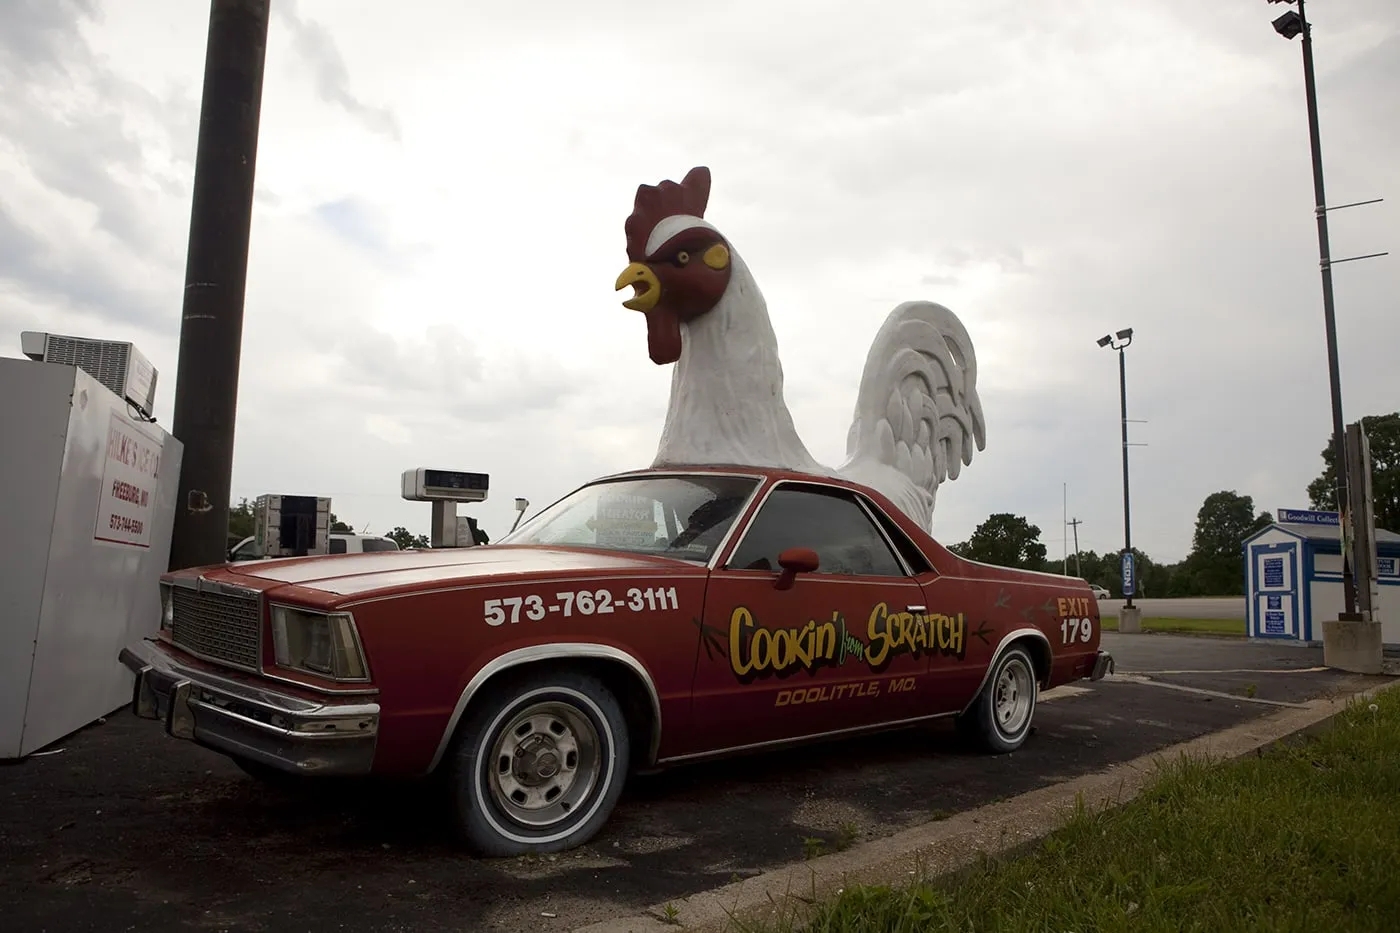 Cookin' from Scratch Chicken Car in Doolittle, Missouri